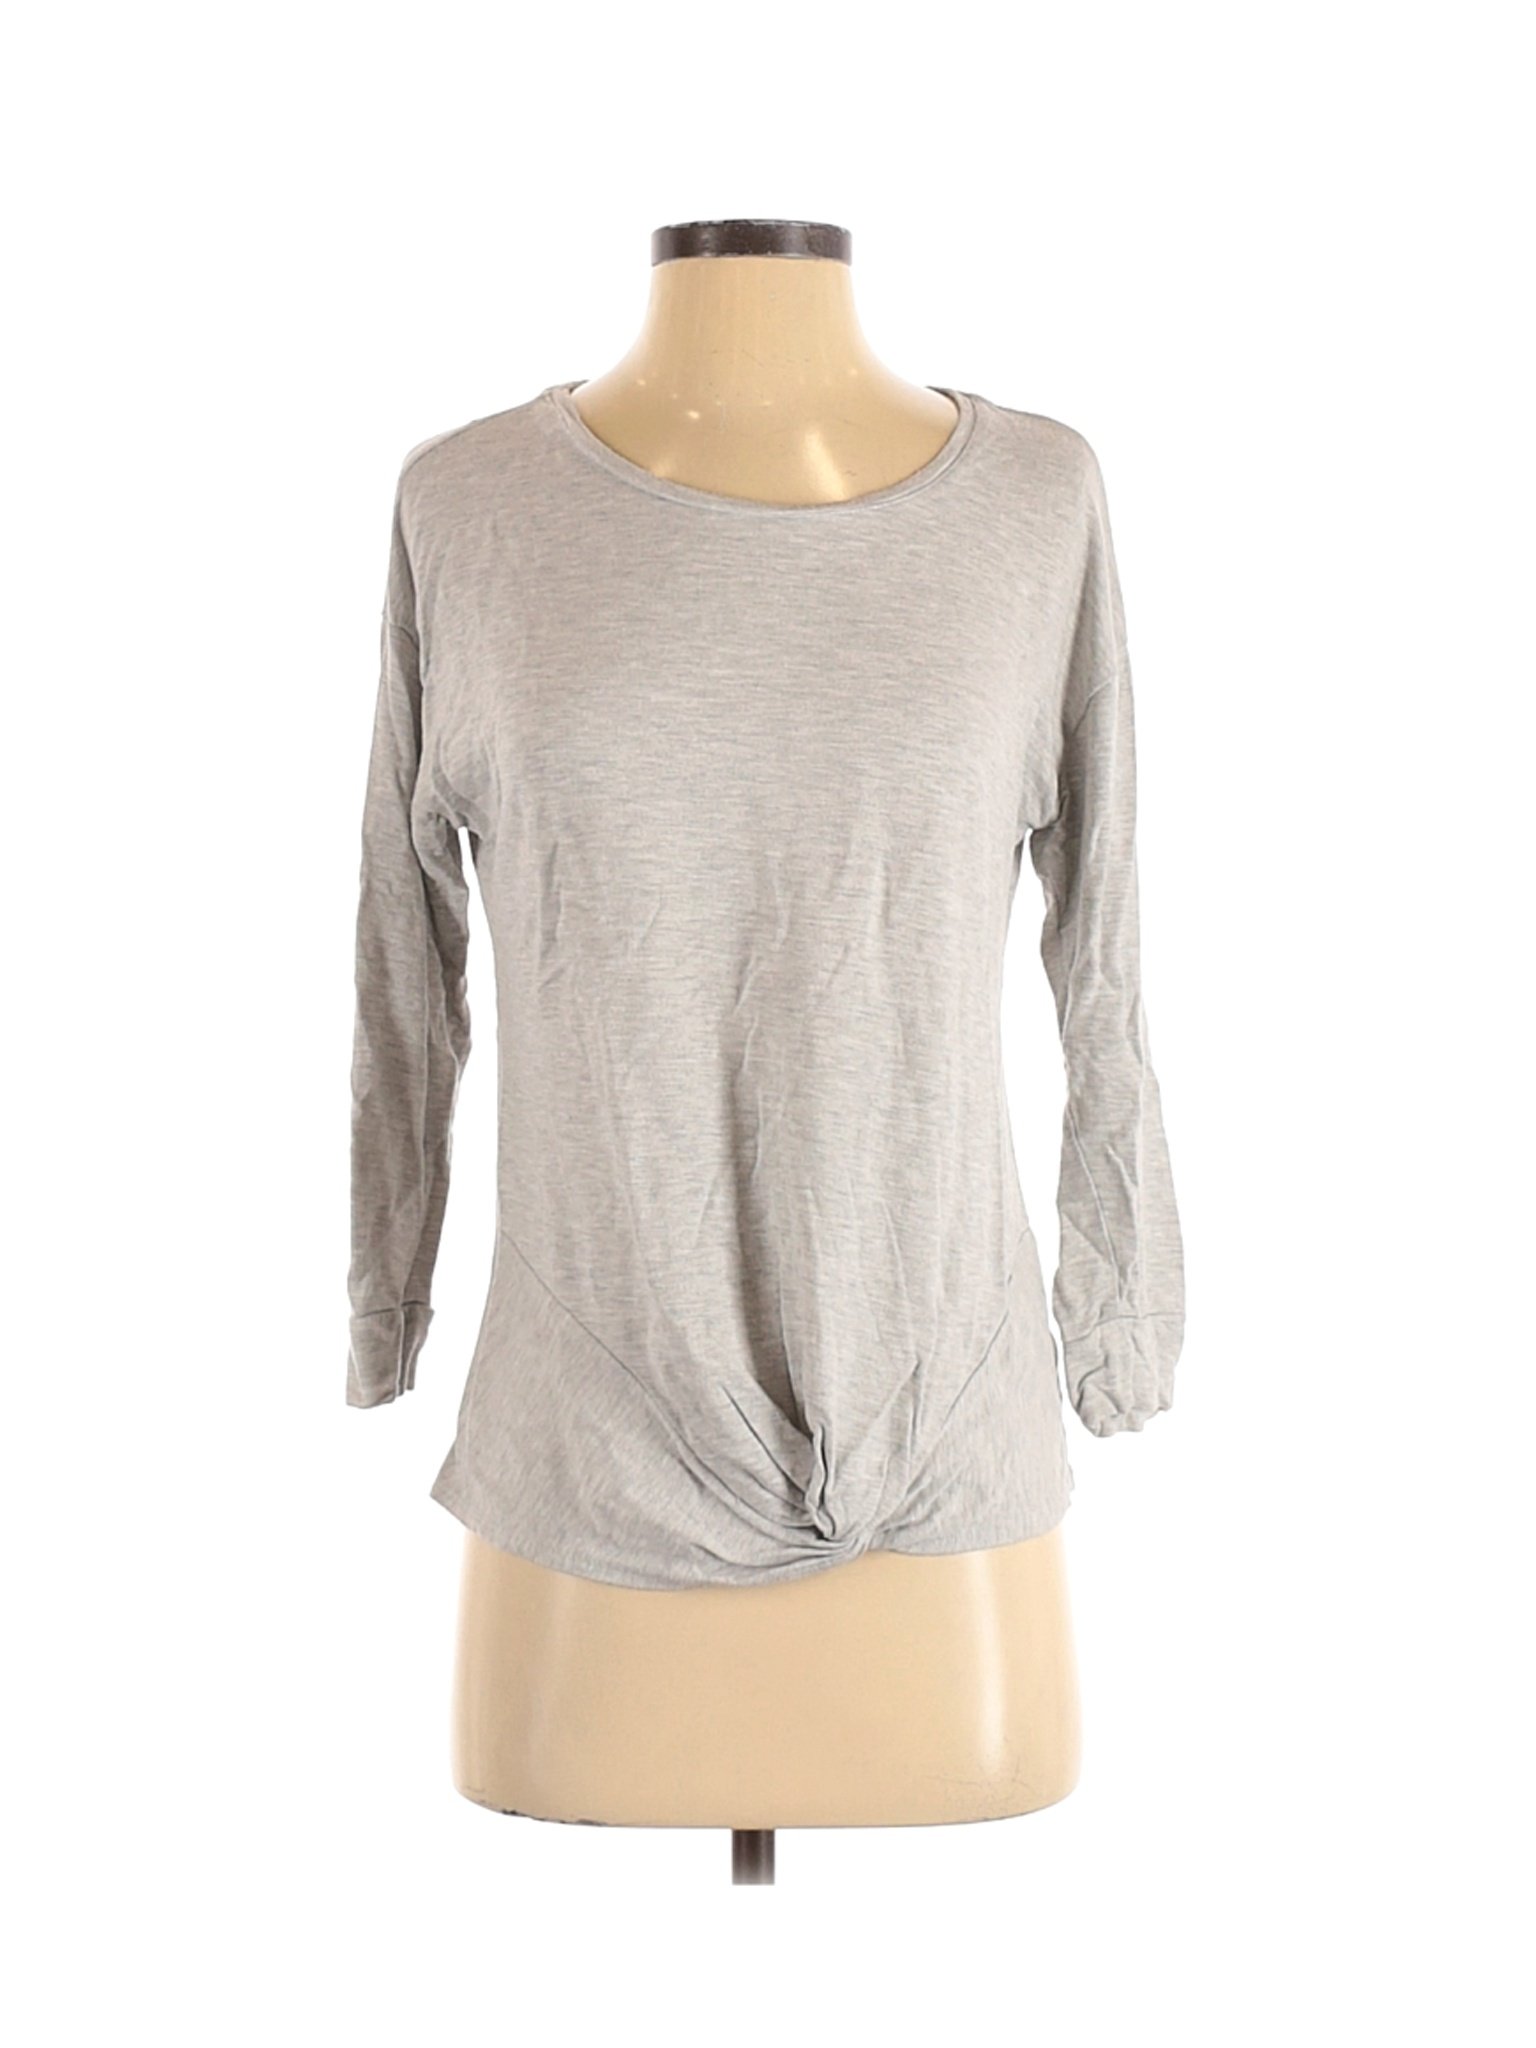 Tahari Women Gray Long Sleeve T-Shirt S | eBay